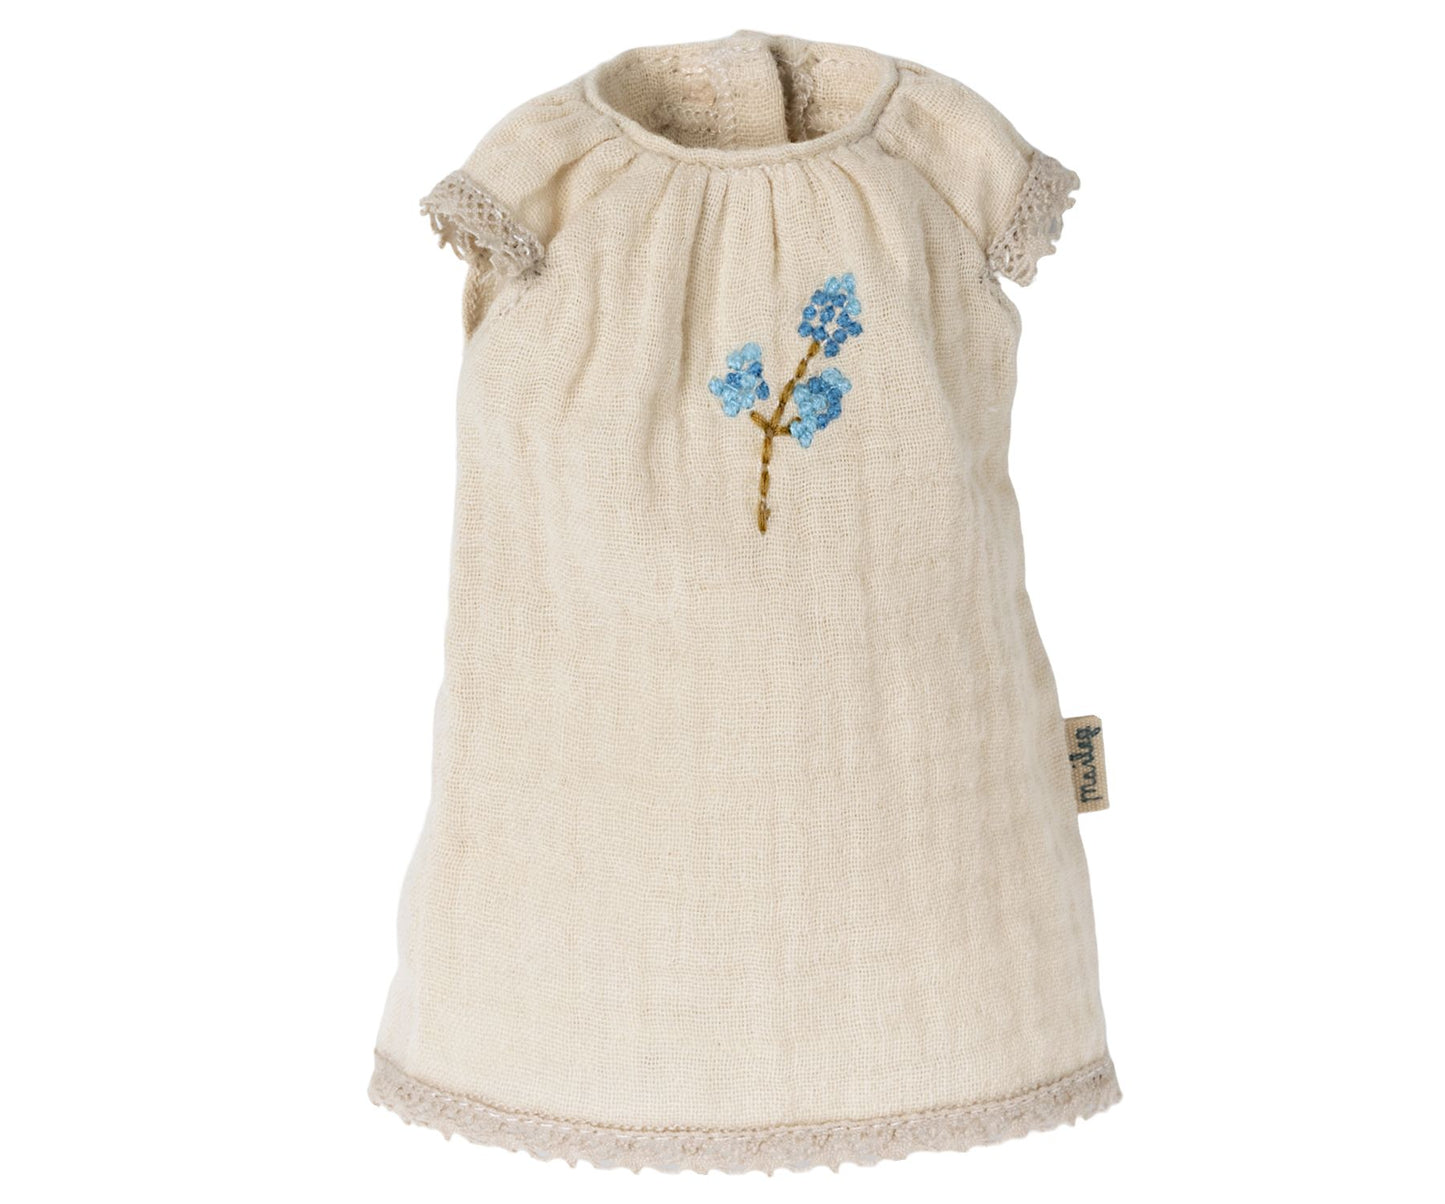 2022 Maileg Dress-Size 2, Cream with Blue Flower